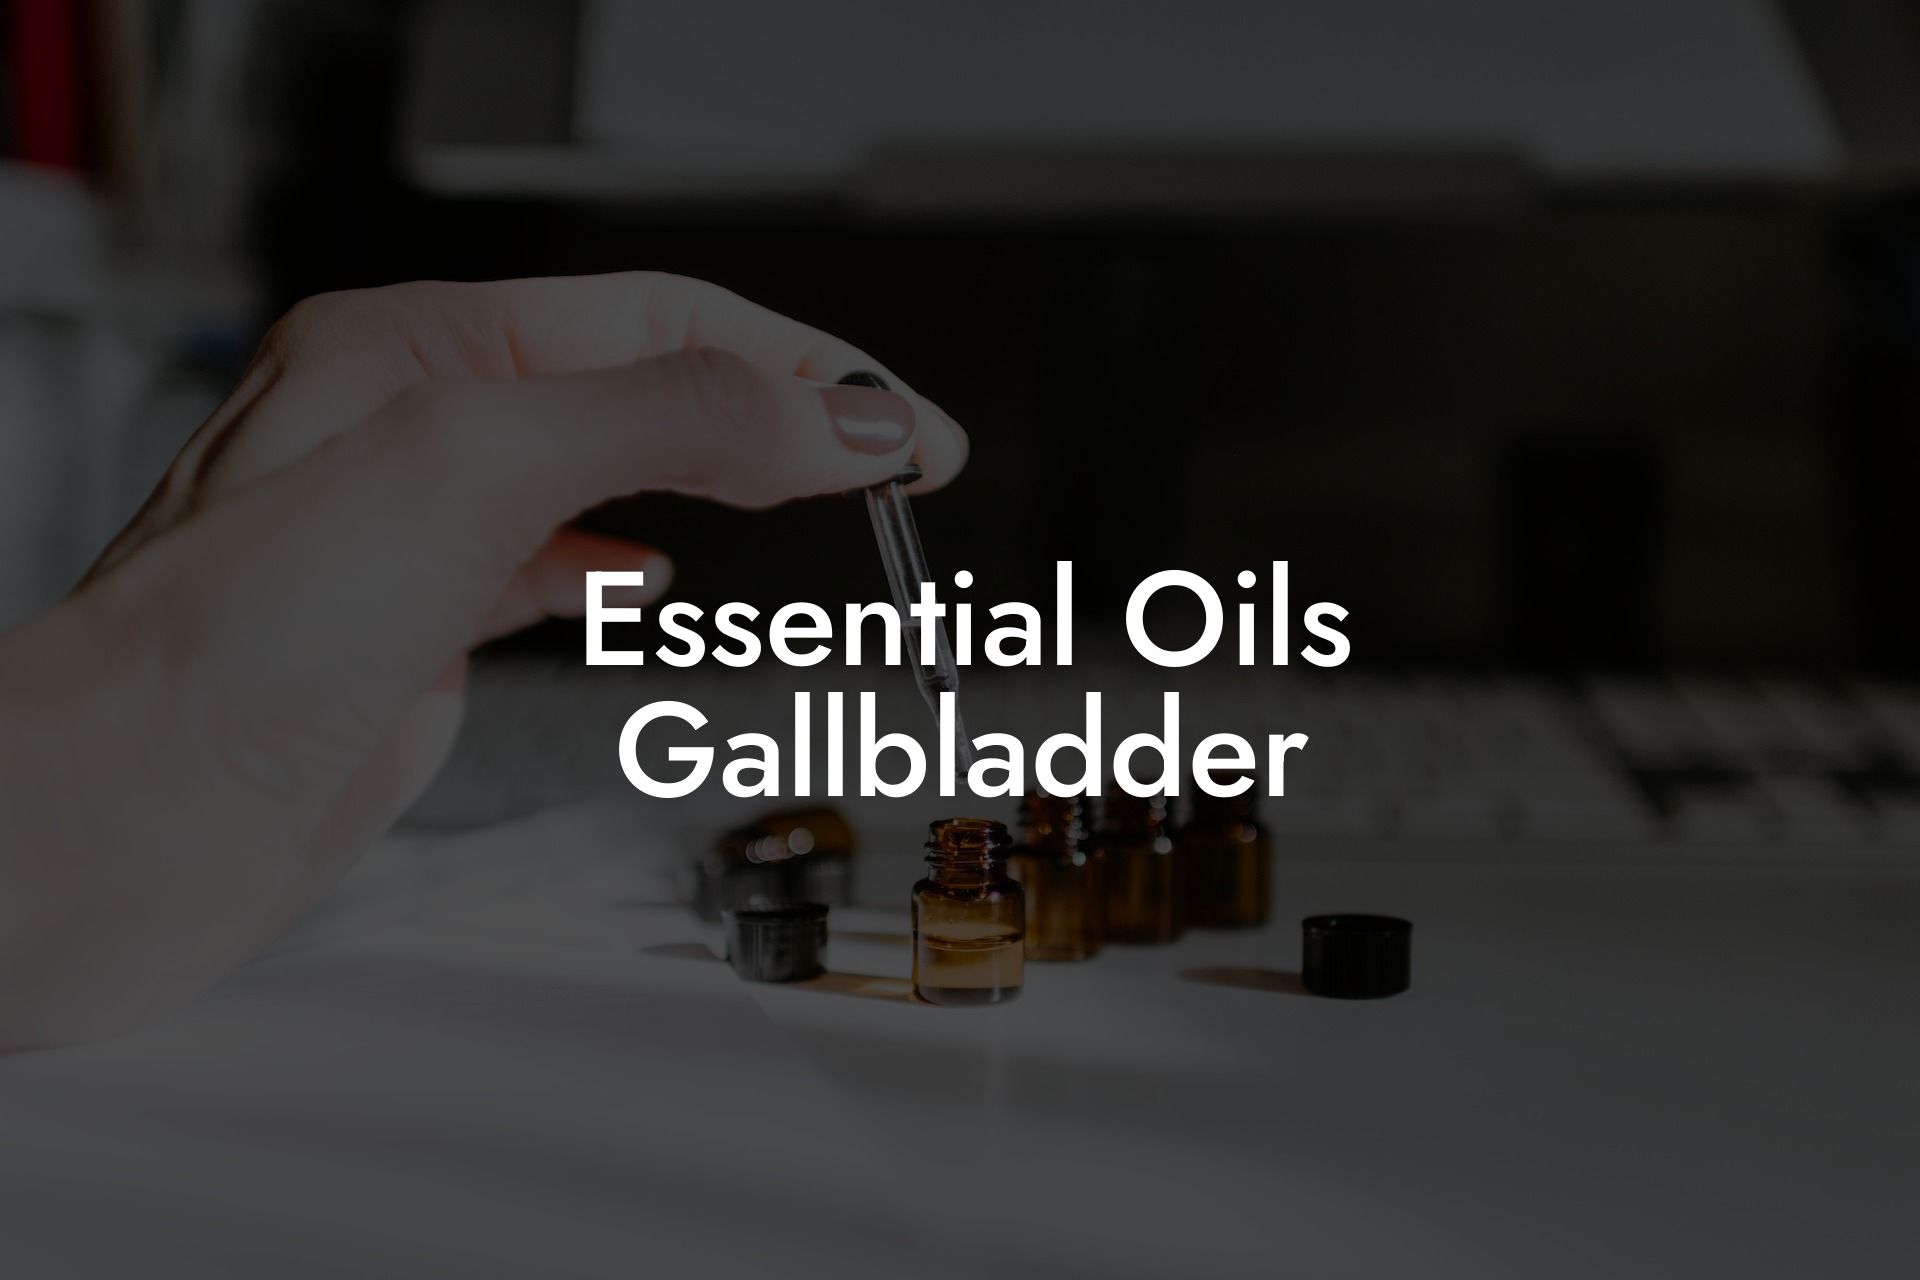 Essential Oils Gallbladder